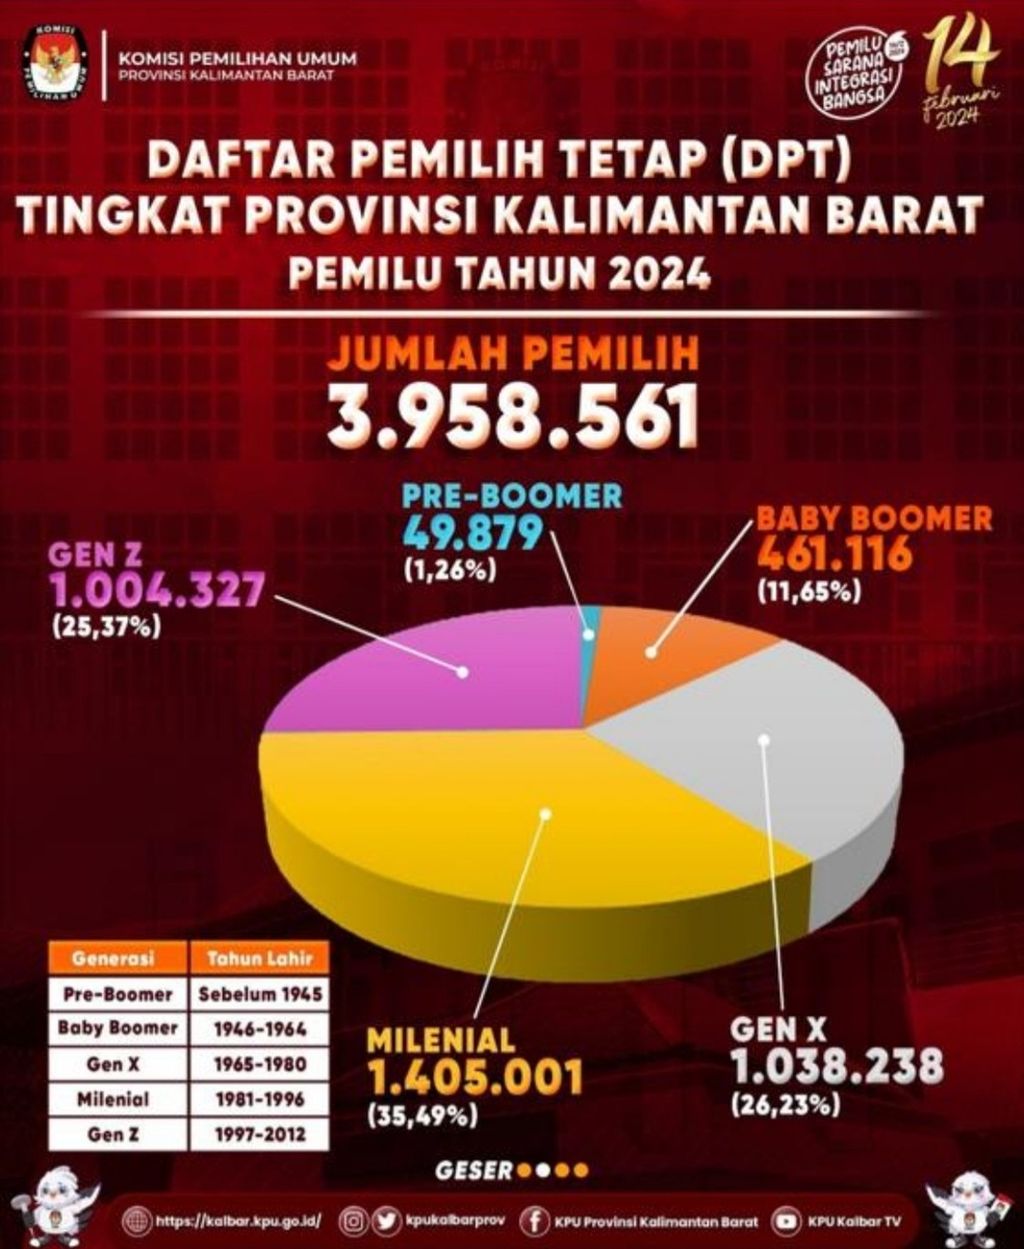 Jumlah pemilih di Kalimantan Barat dalam Pemilu 2024.